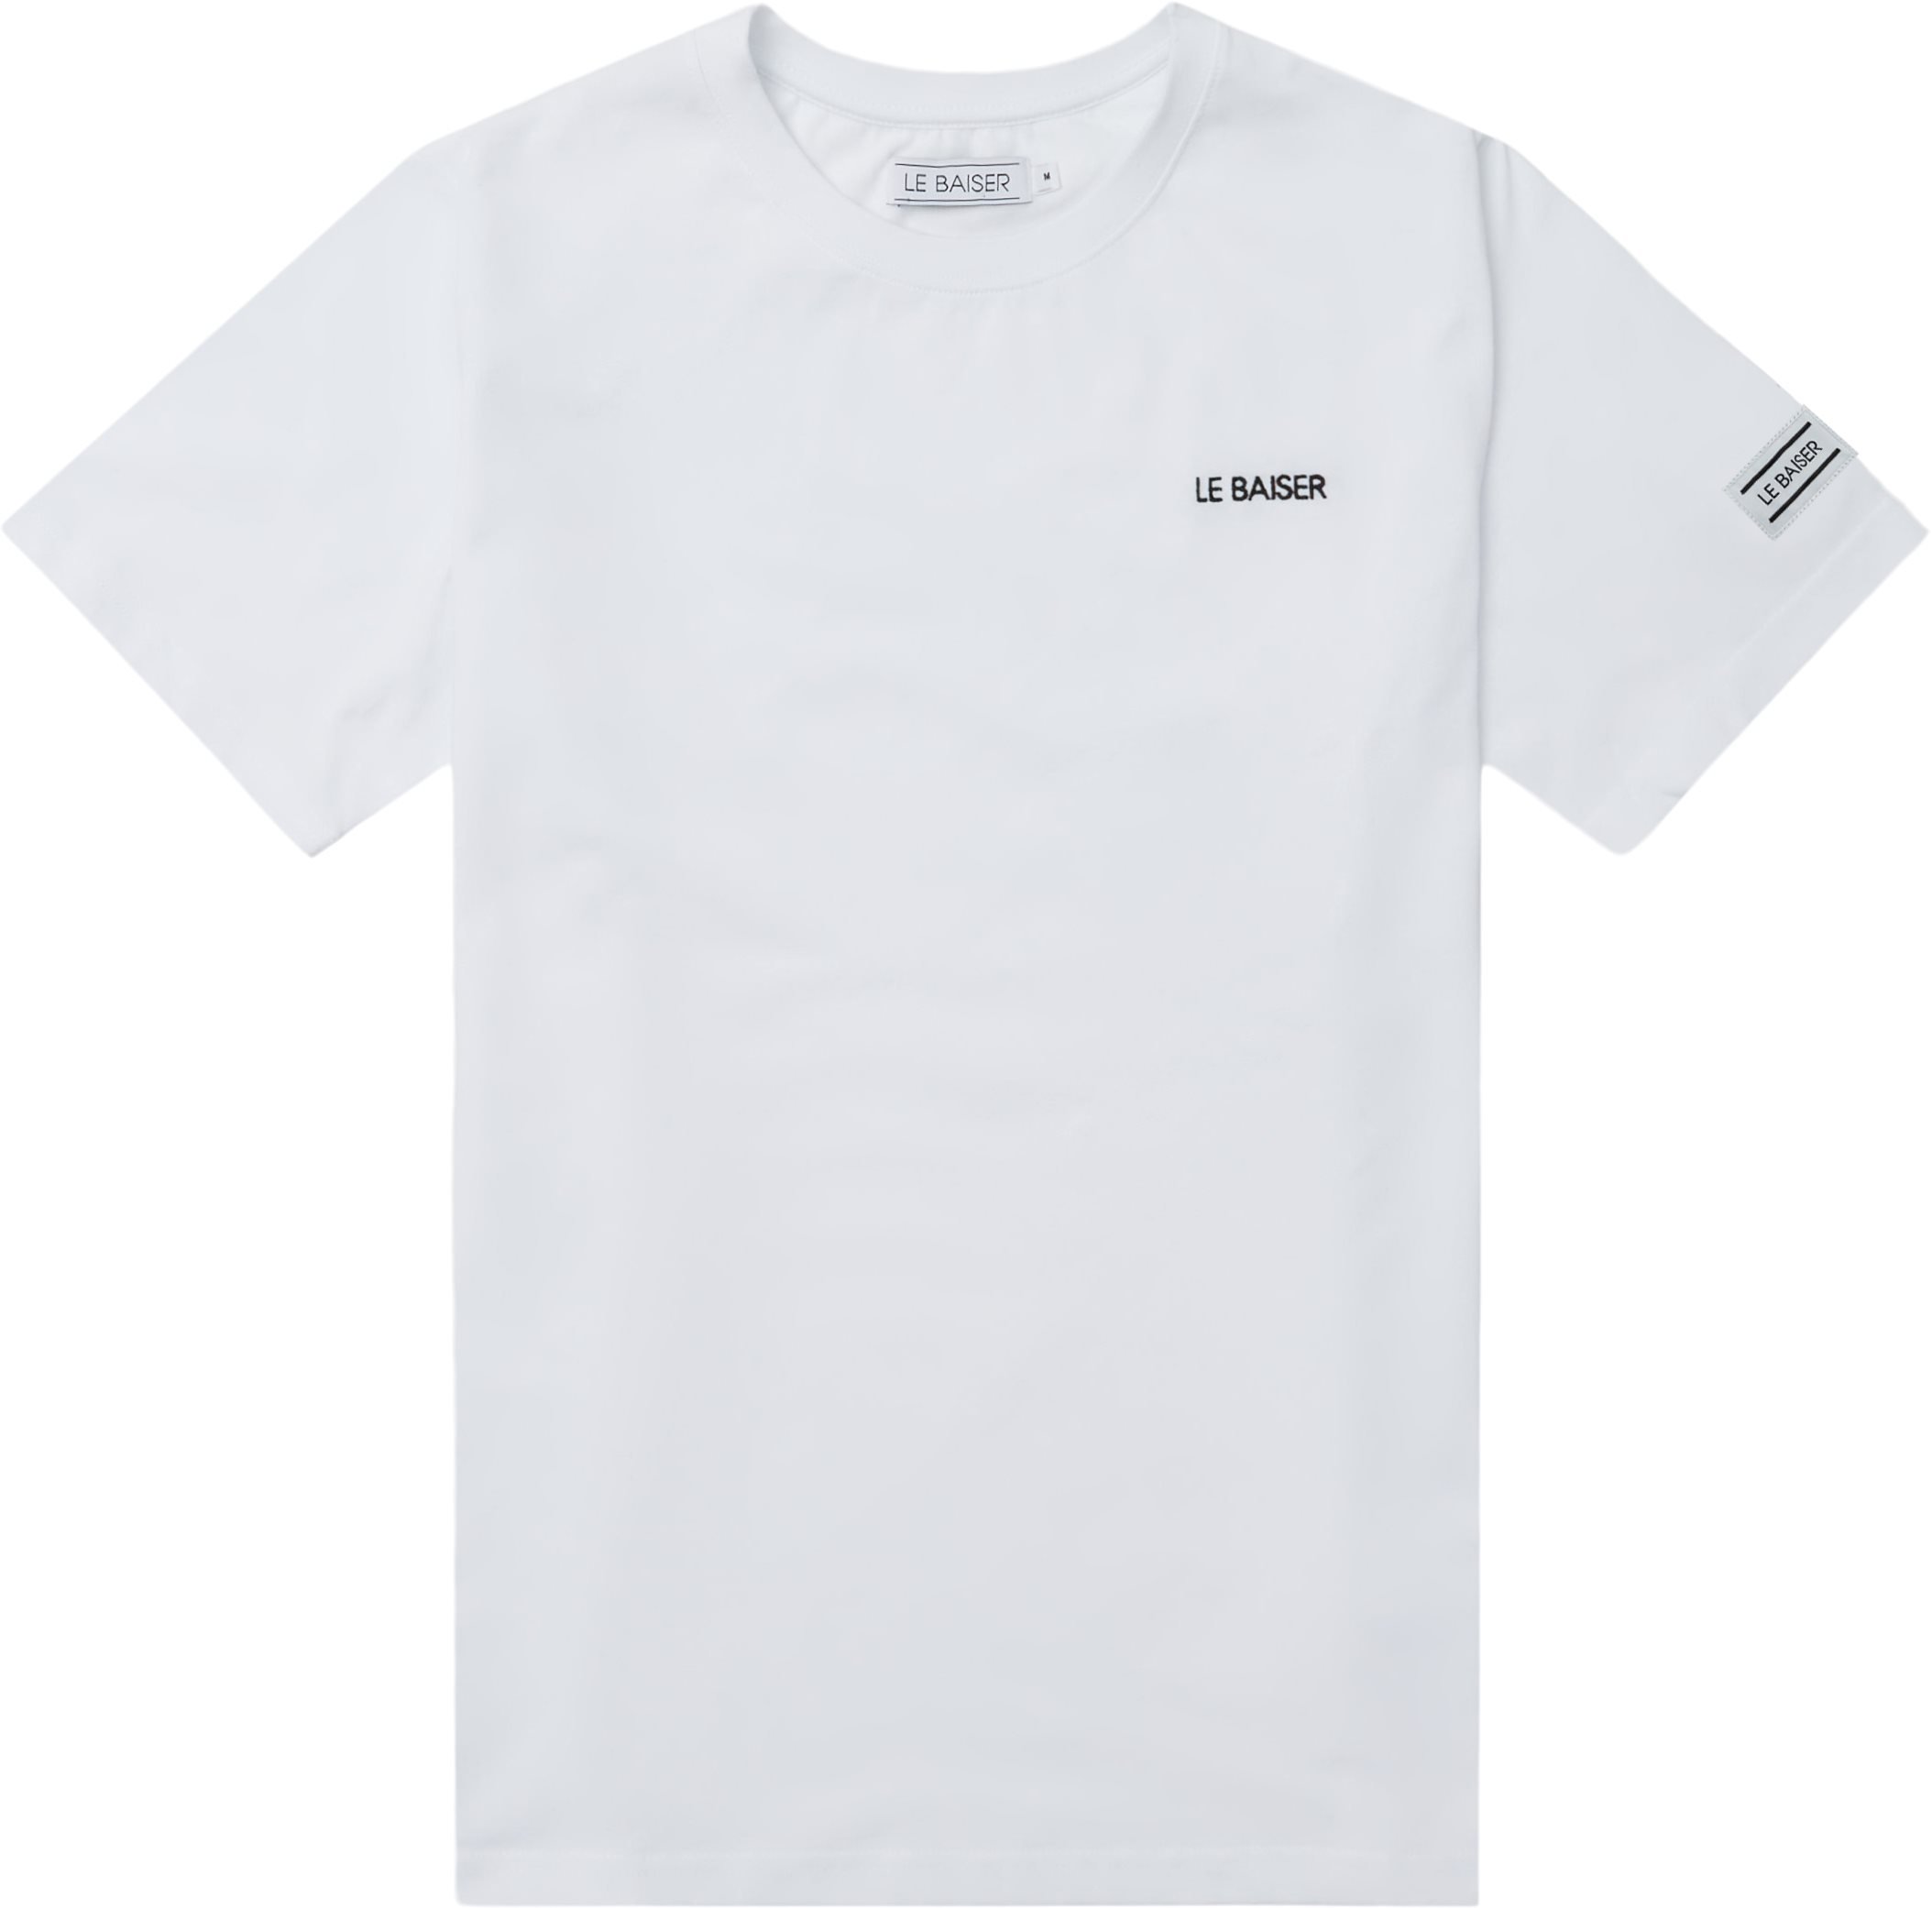 Bourg Tee - T-shirts - Regular fit - Hvid